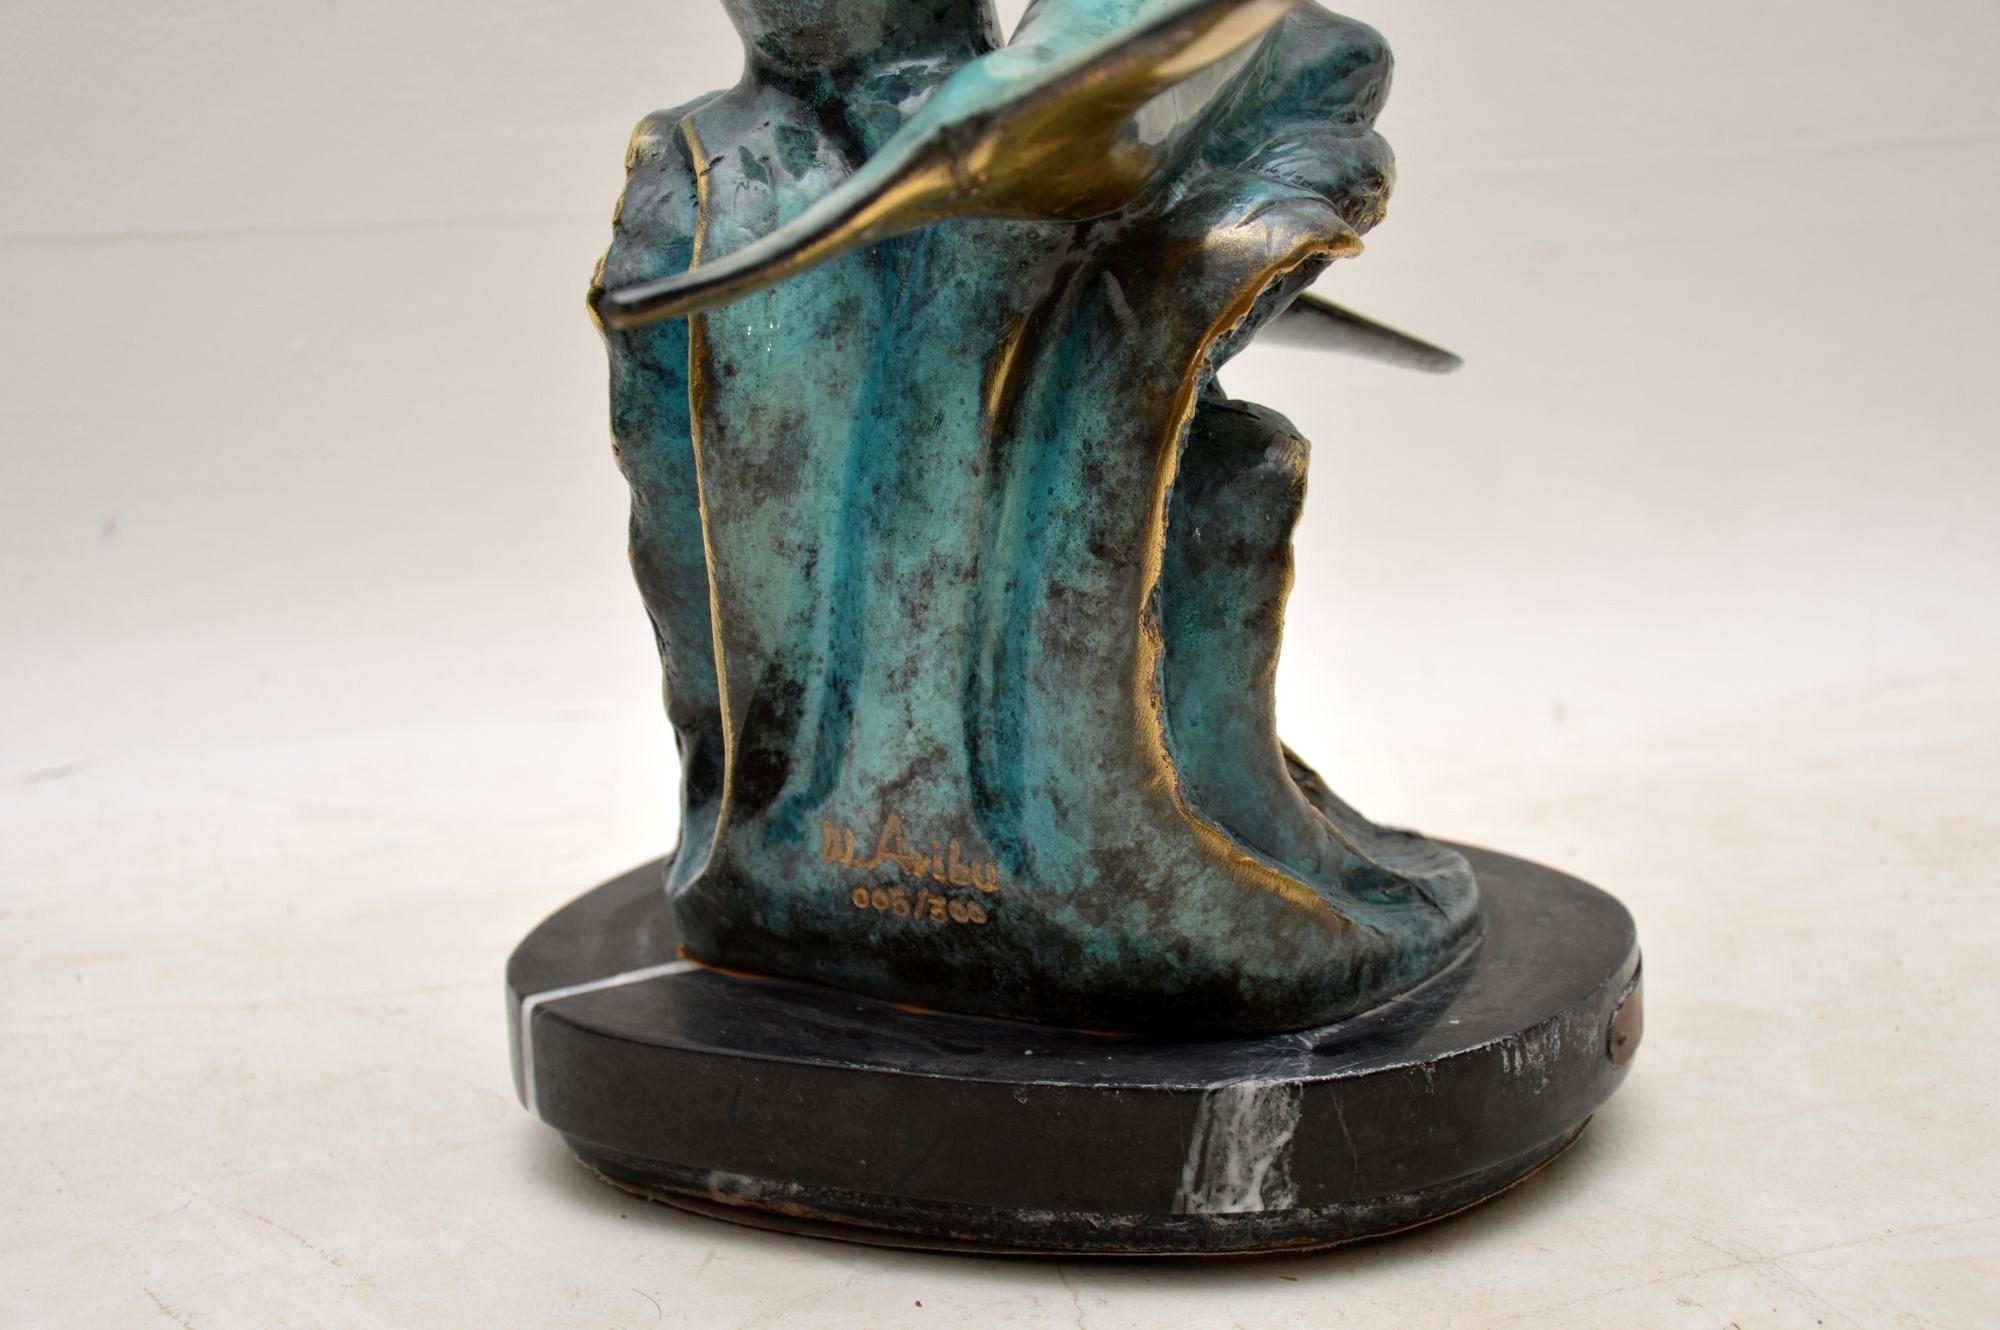 Limited Edition Bronze Sculpture by W. Aribu, “Pals 1” 005/300 4